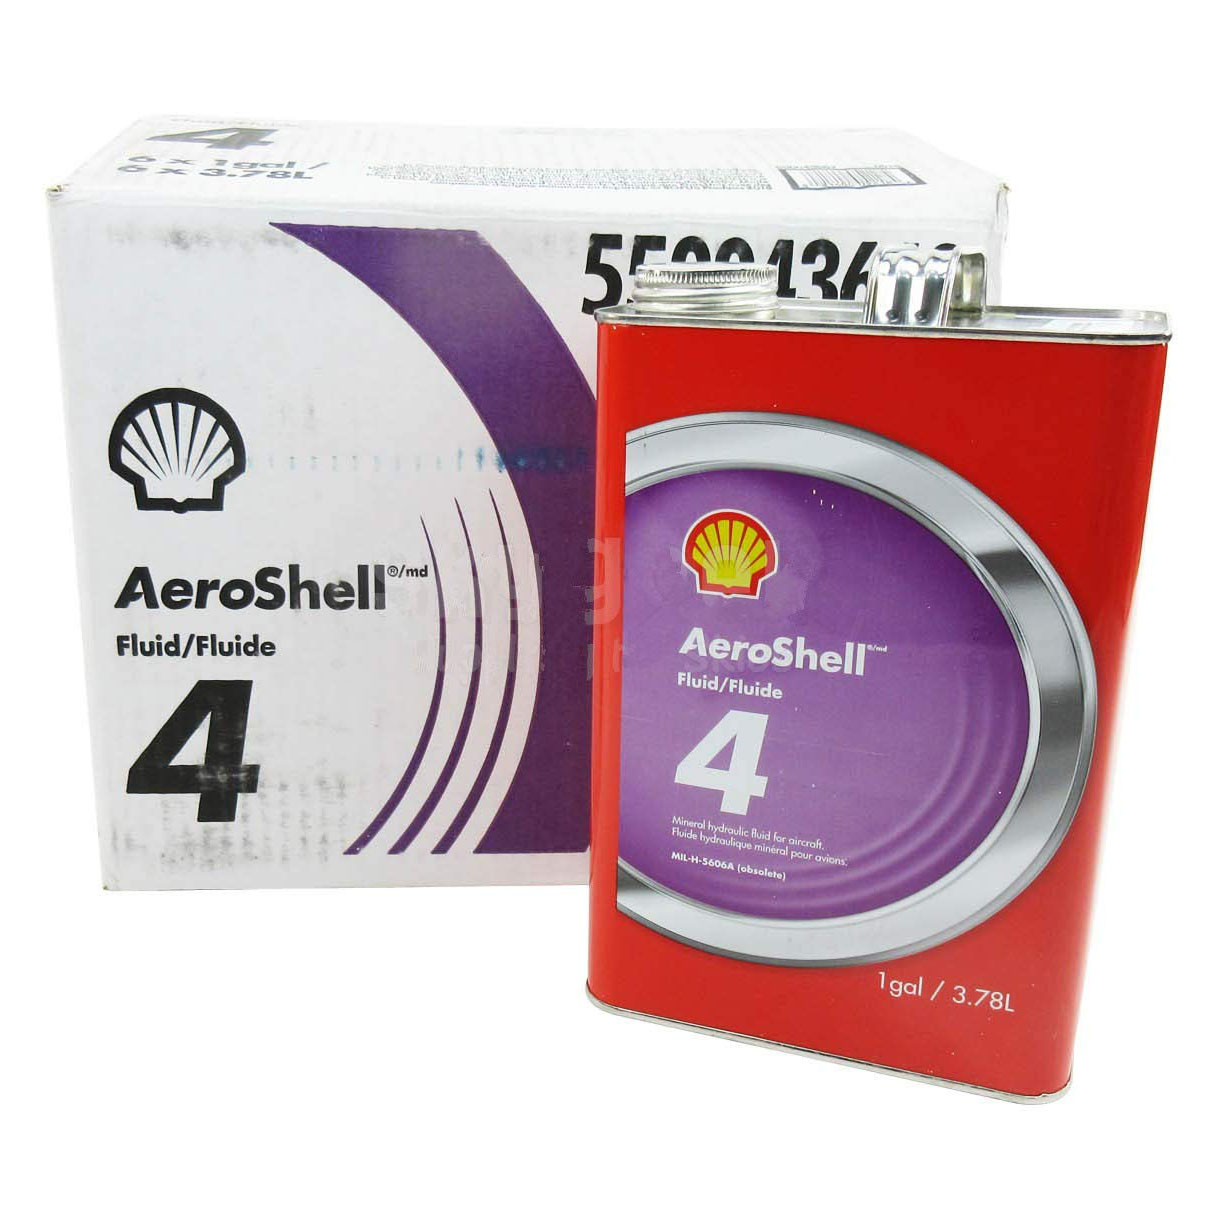 壳牌Aeroshell Fluid 4航空液压油